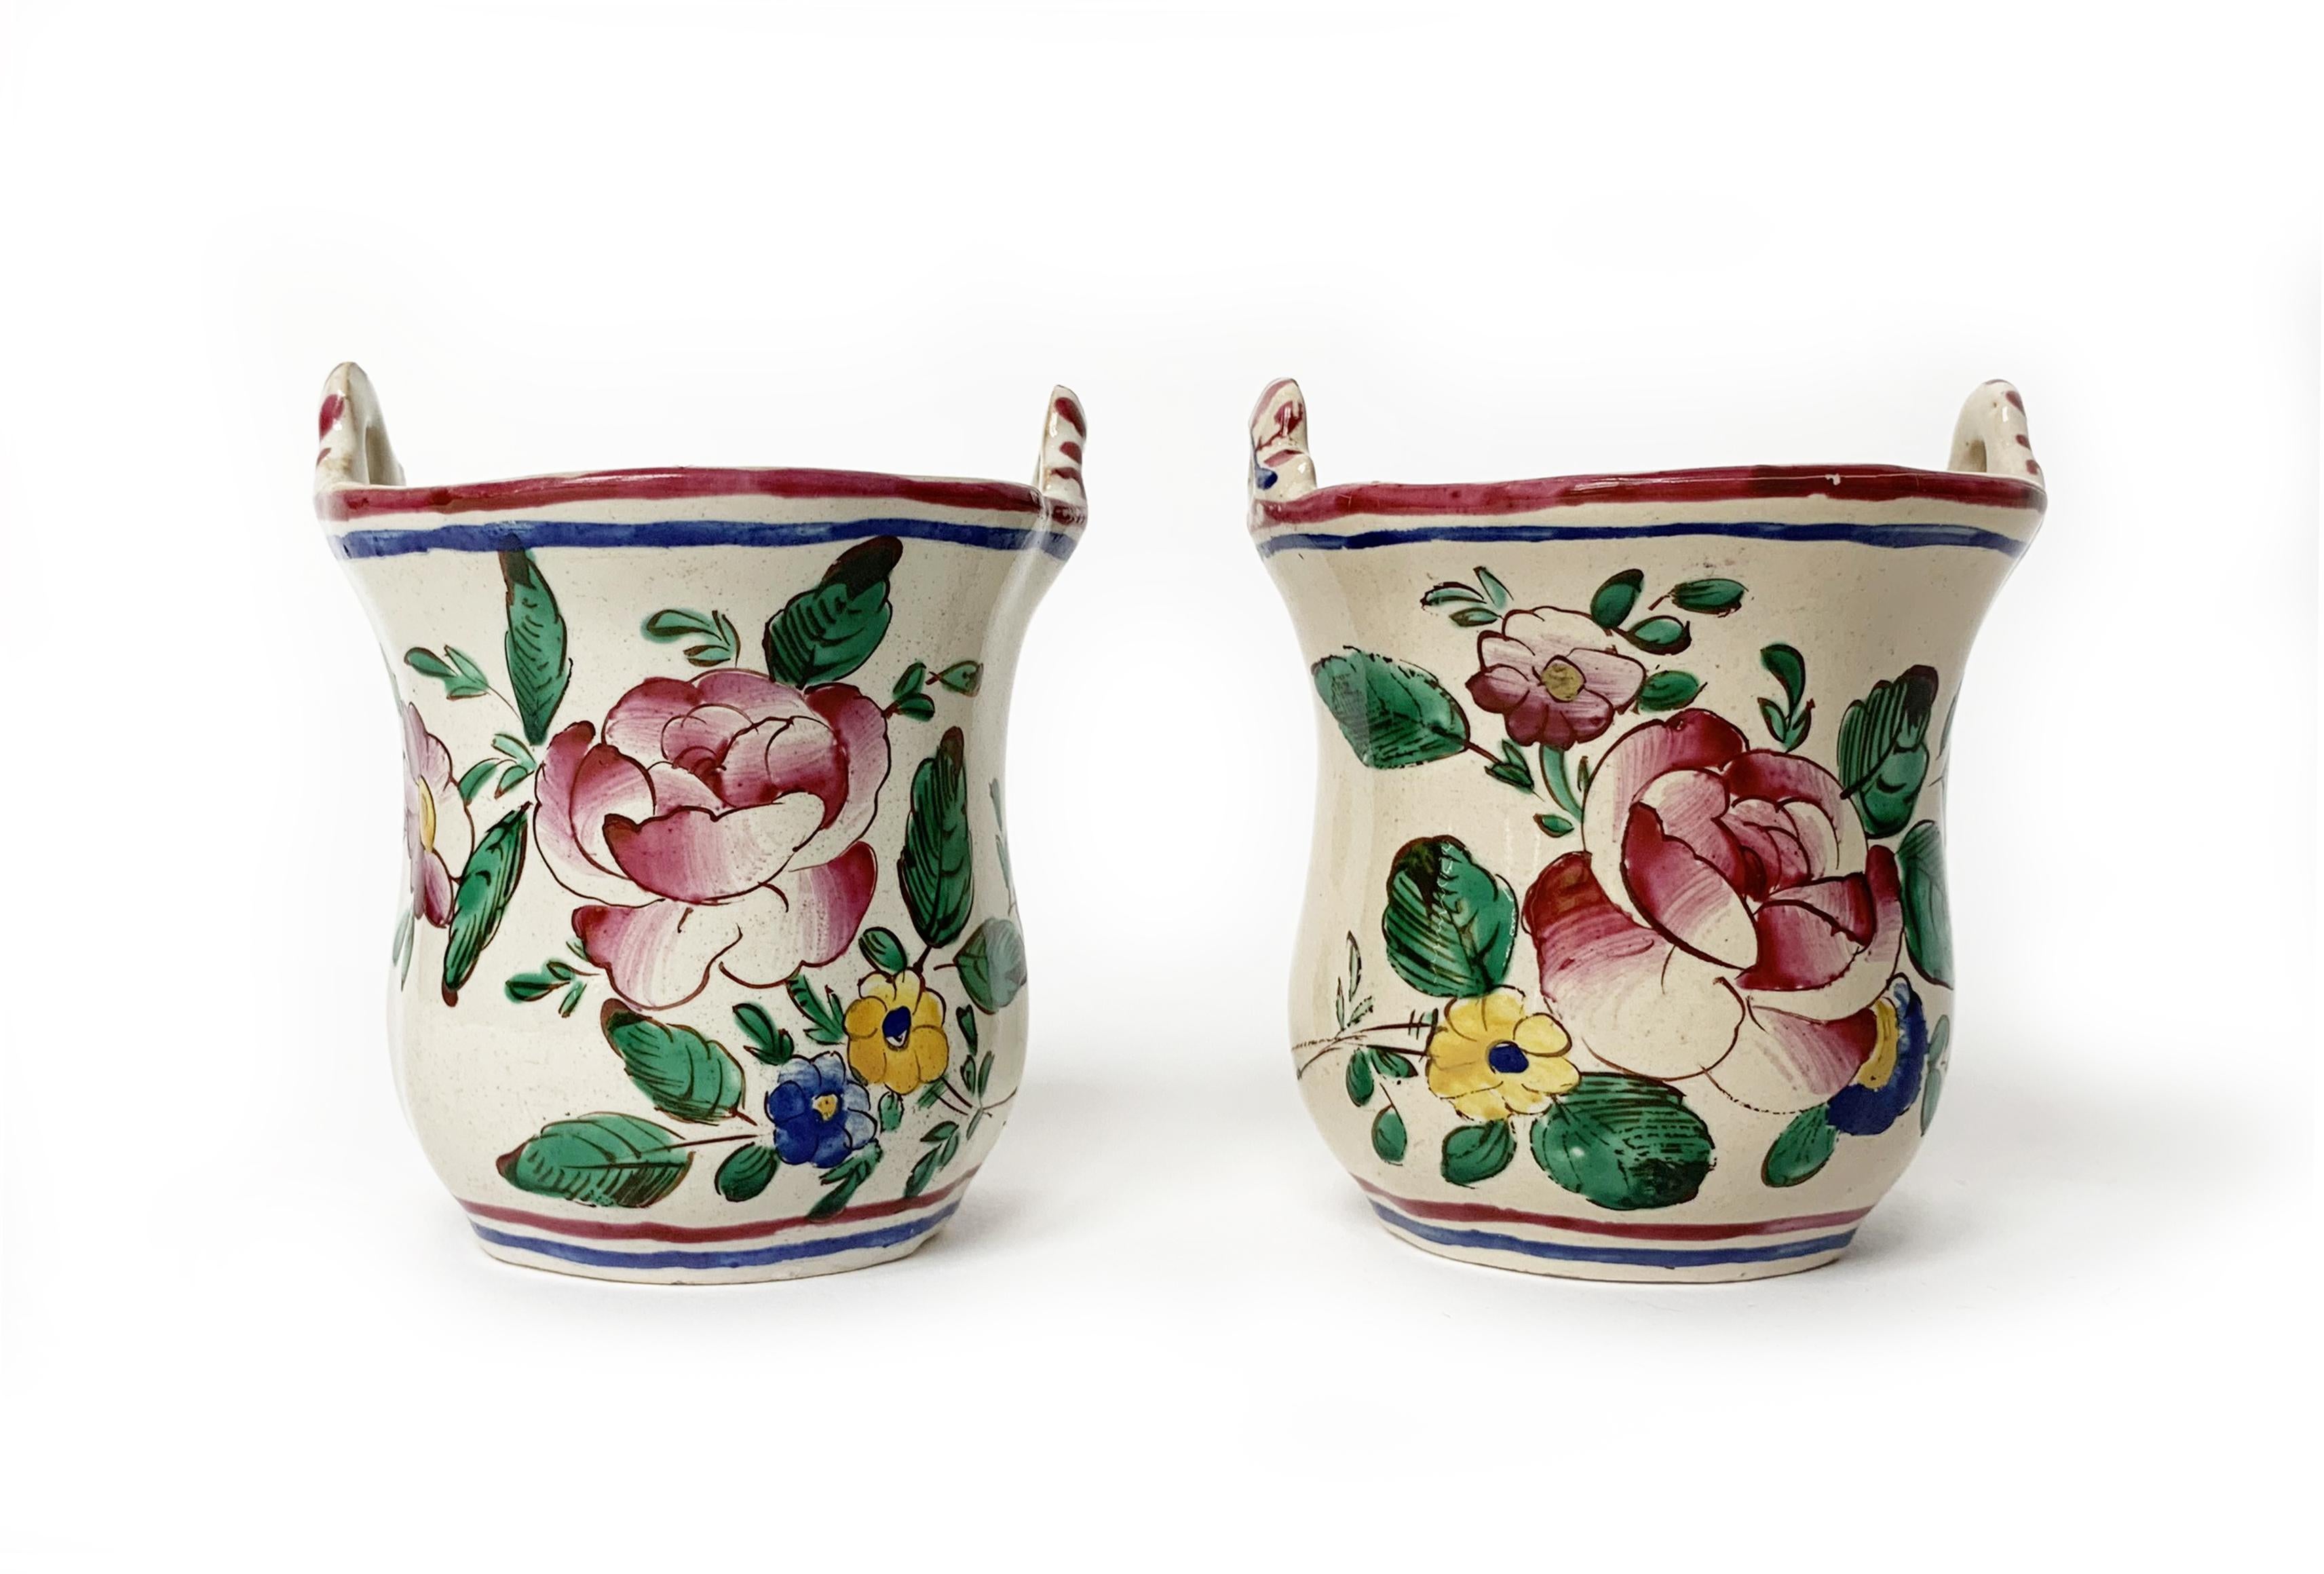 Two maiolica flower pots
Antonio Ferretti Manufacture
Lodi, Circa 1770 - 1780
Maiolica polychrome decorated “a piccolo fuoco” (third fire)
They measure: 3.46 x 3.14 x 2,67 in (8.8 x 8 x 6,8 cm)
They weigh: 0.55 lb (253 g)
State of